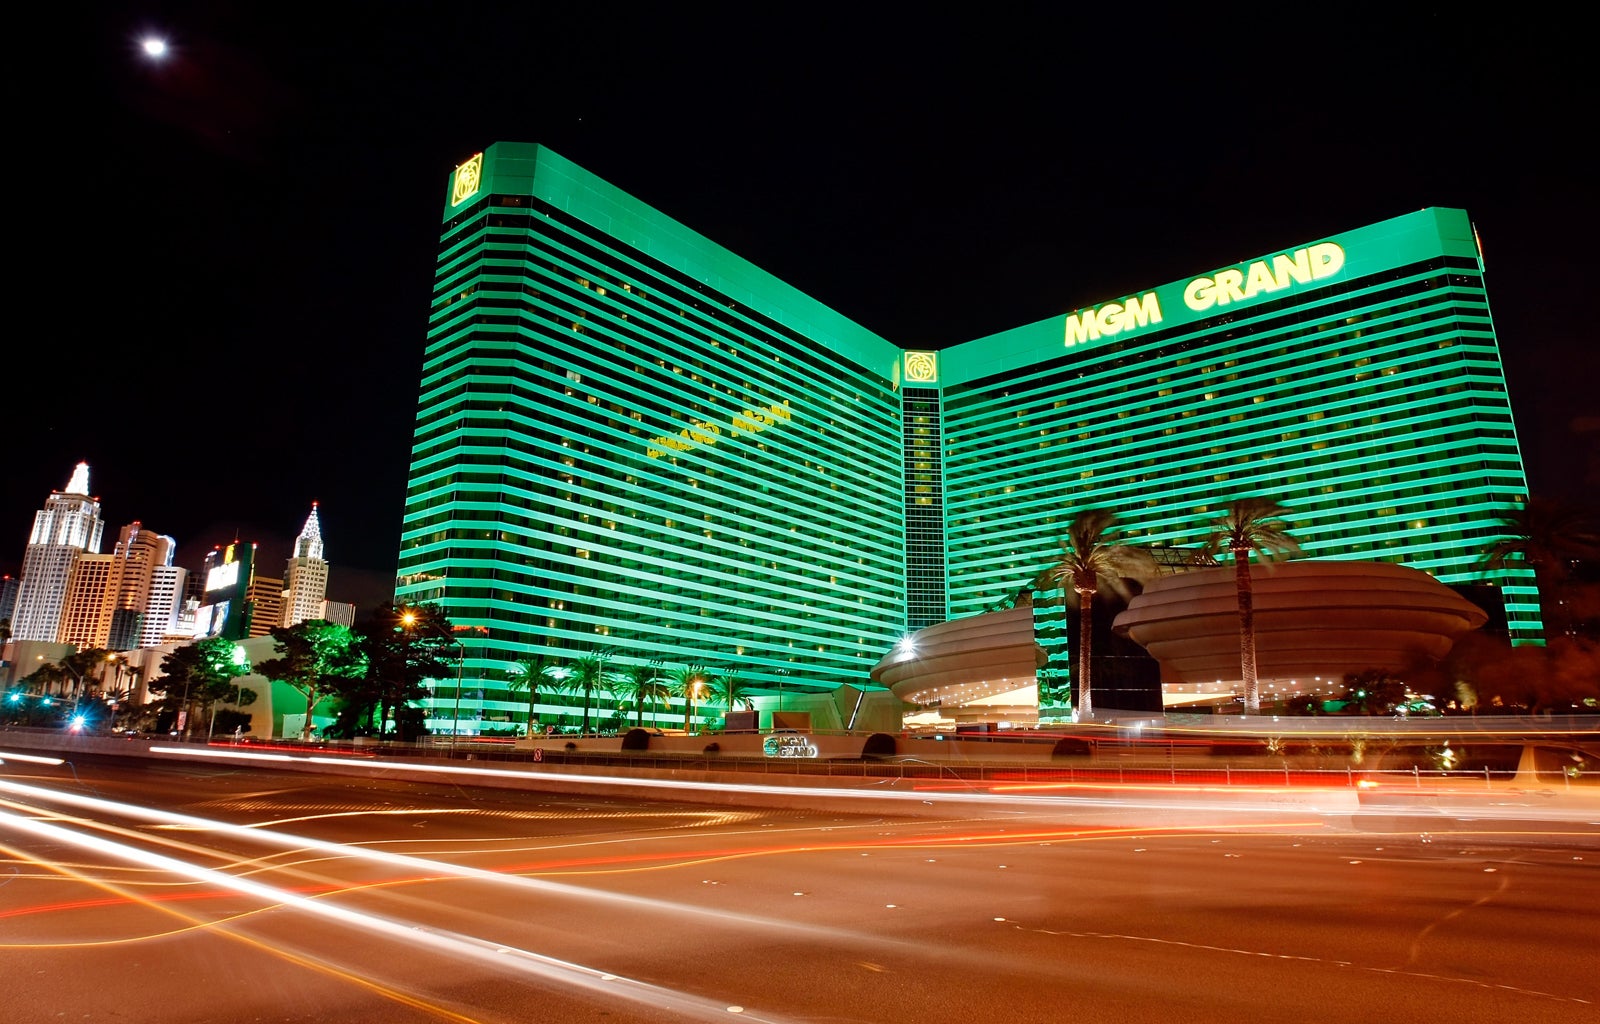 Mandalay Bay Resort And Casino, Las Vegas: $55 Room Prices & Reviews